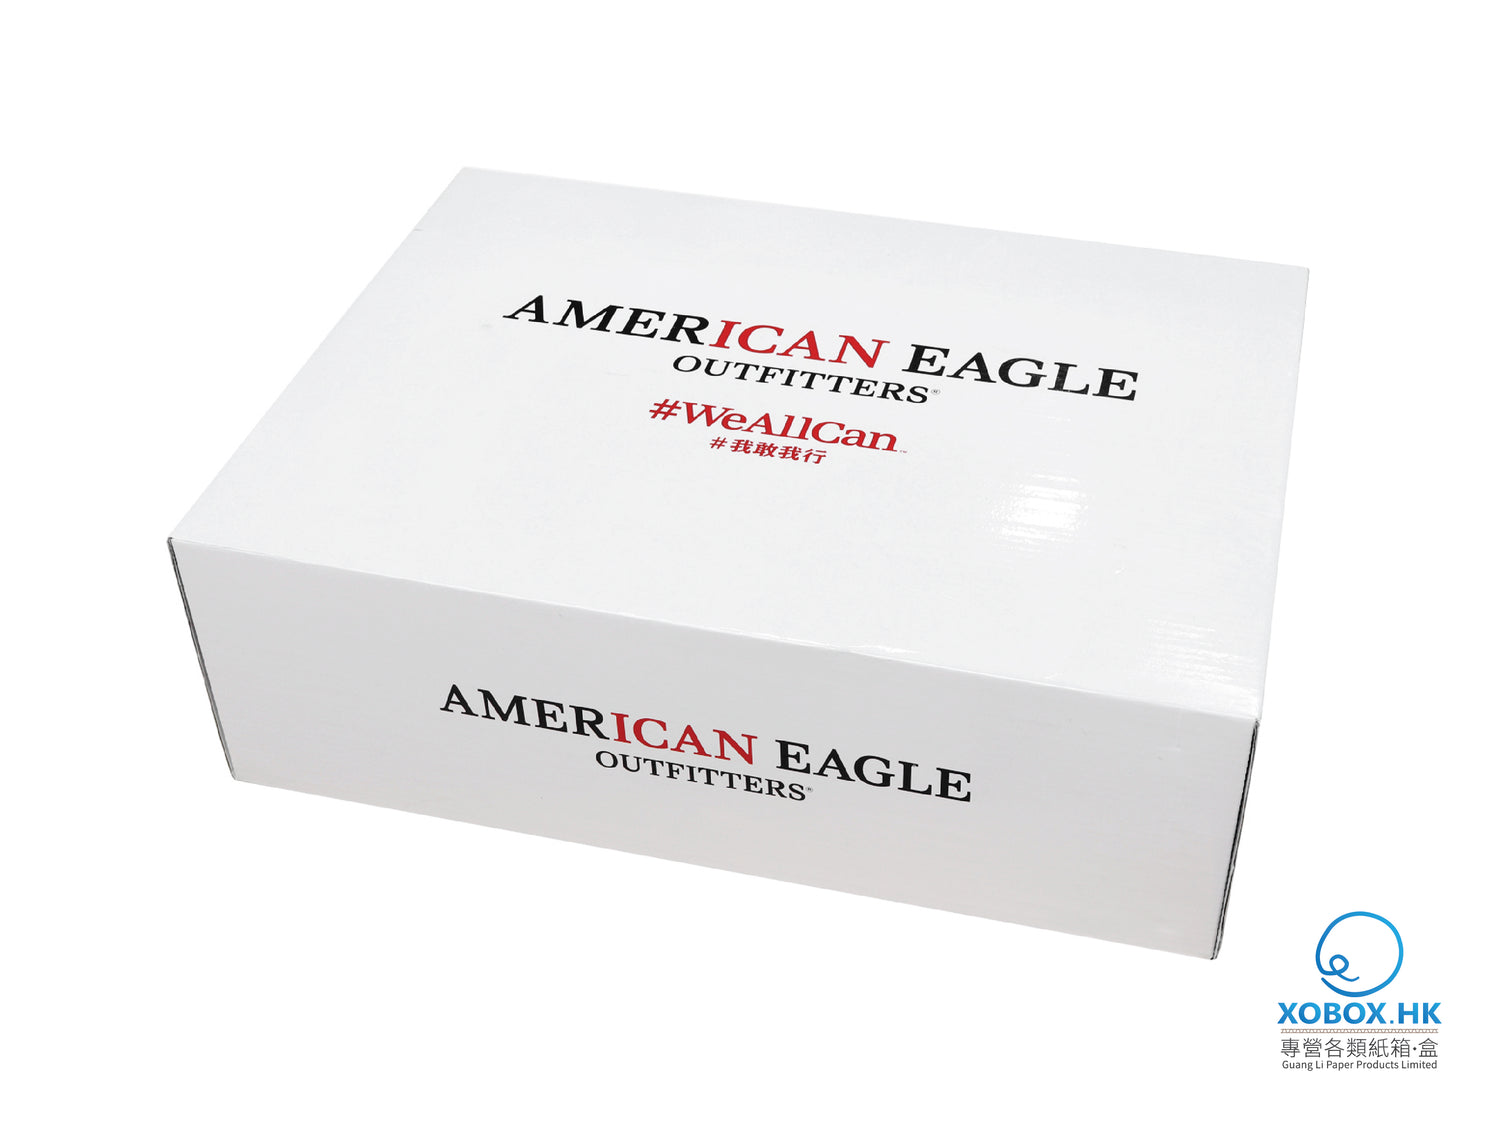 American Eagle #WeAllCan